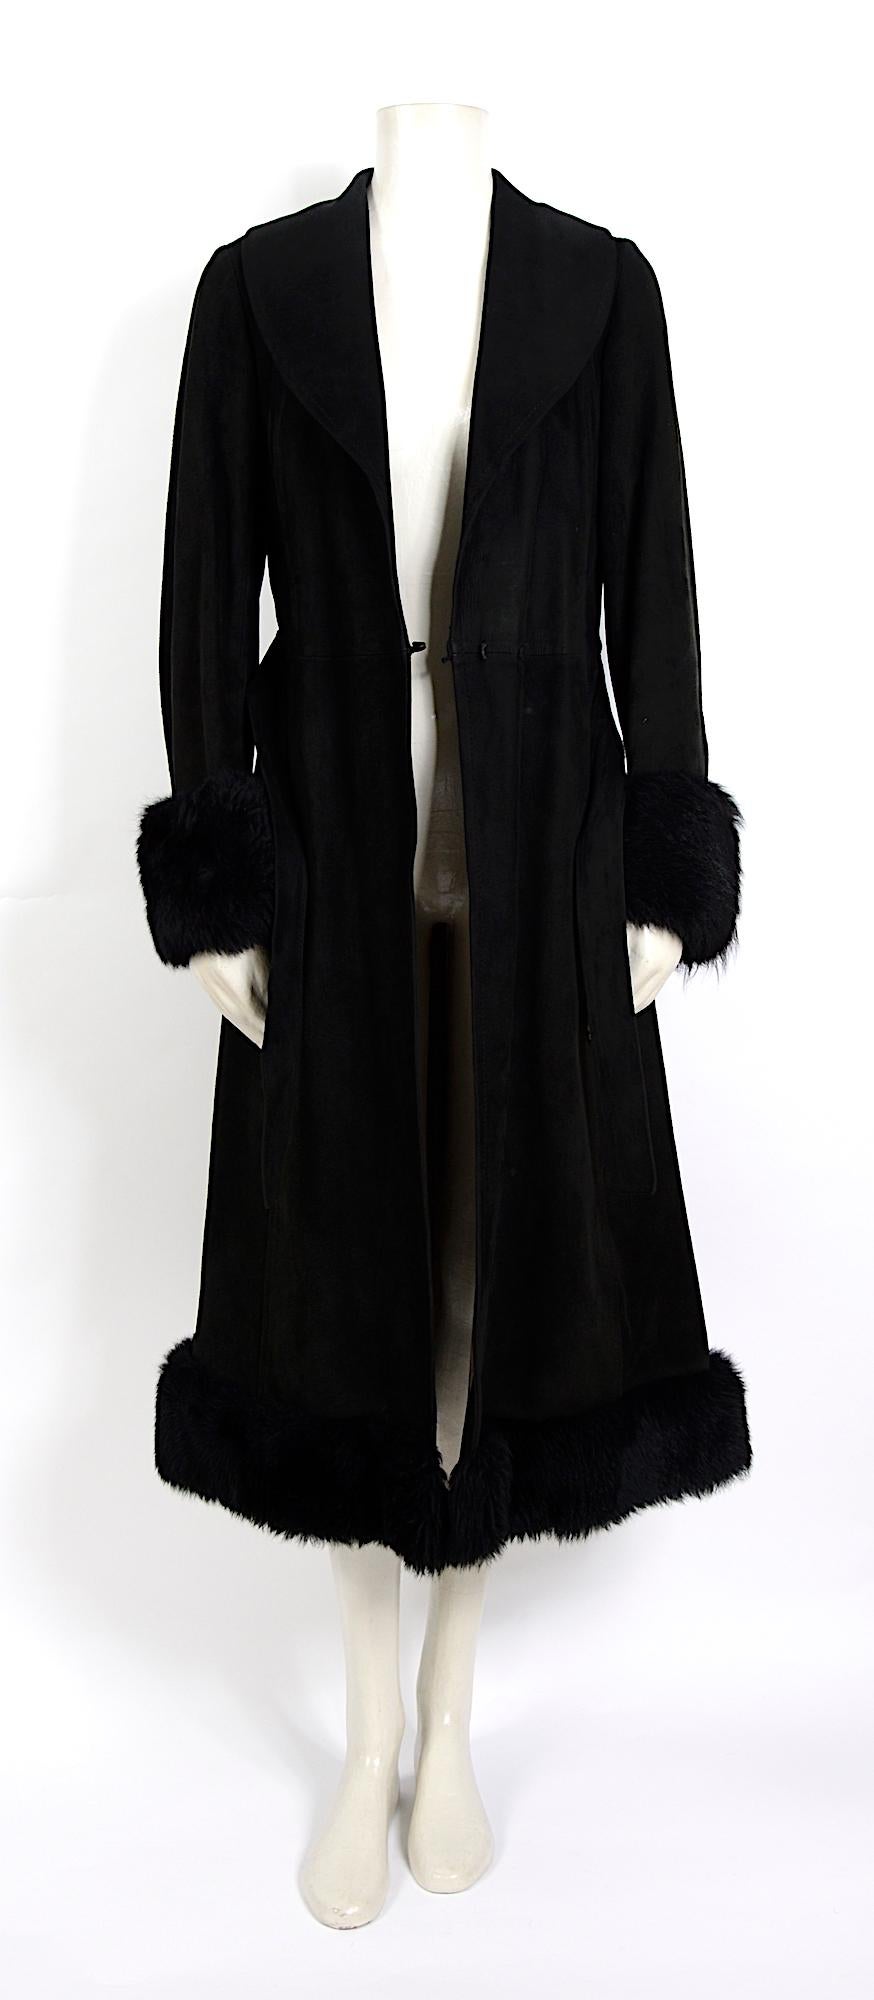 Women's Lanvin vintage 1960s black suede belted coat with removable fur collar